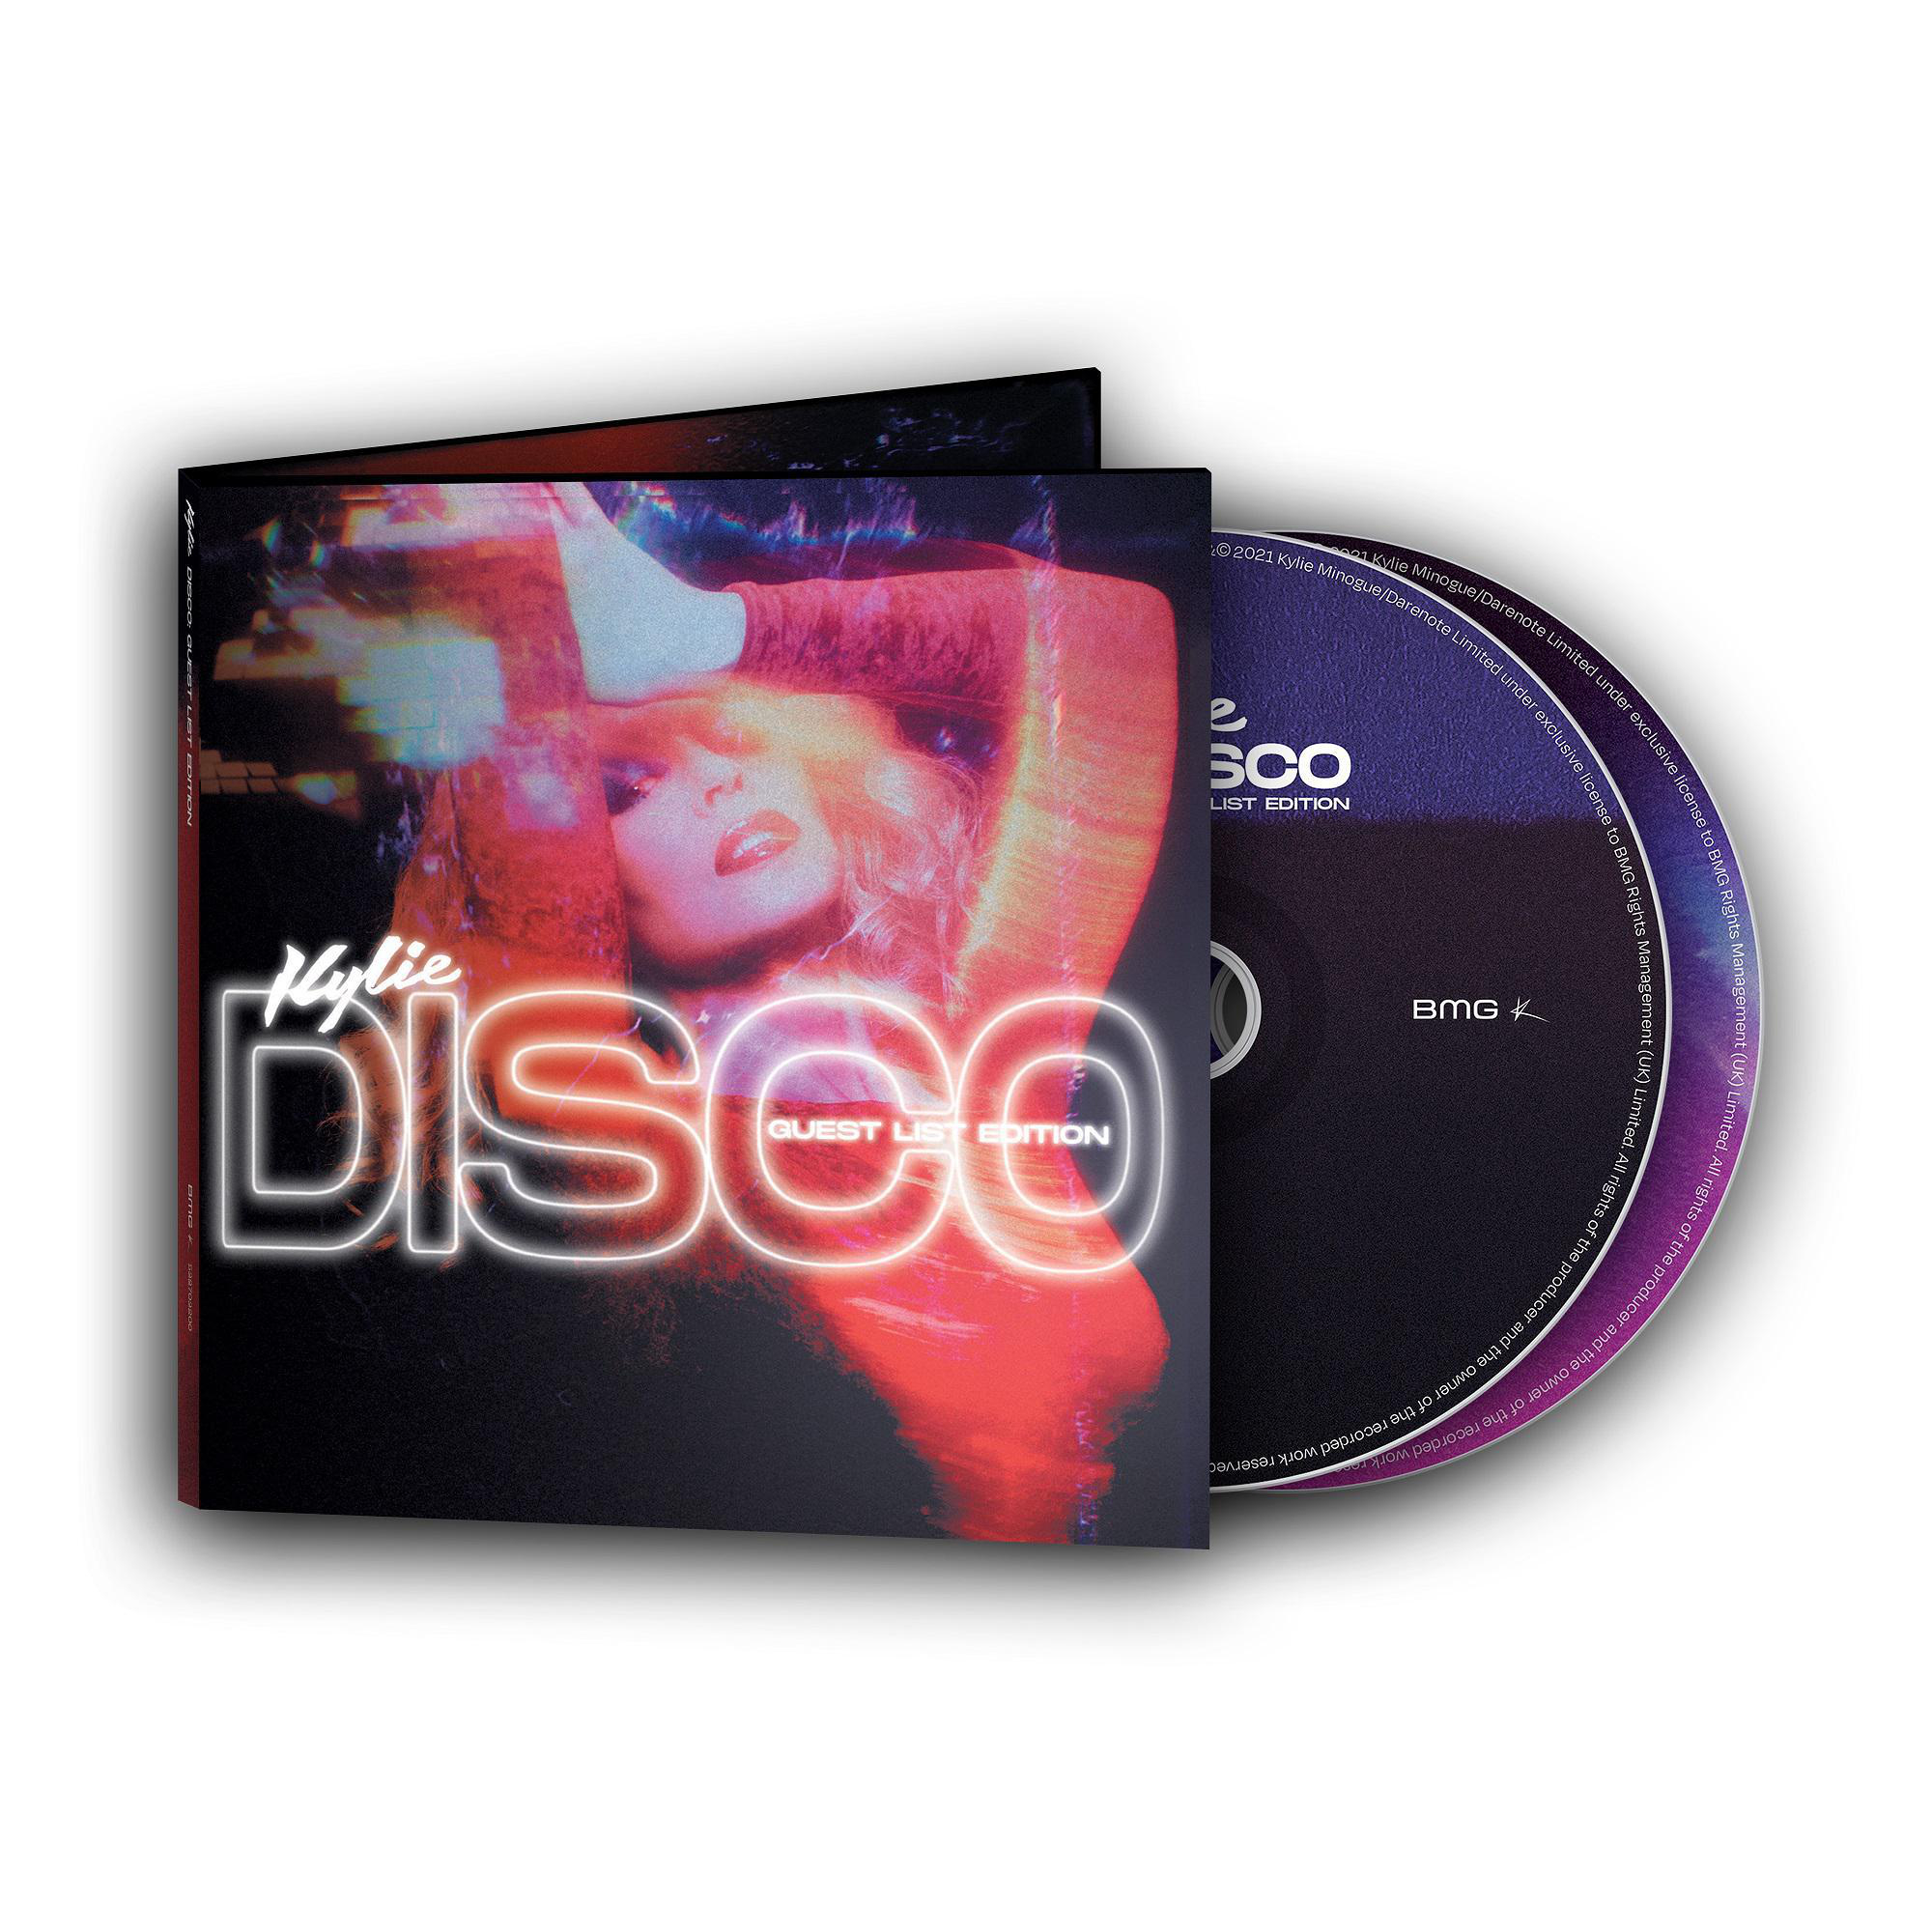 Minogue Kylie - DISCO:Guest (CD) List Edition -